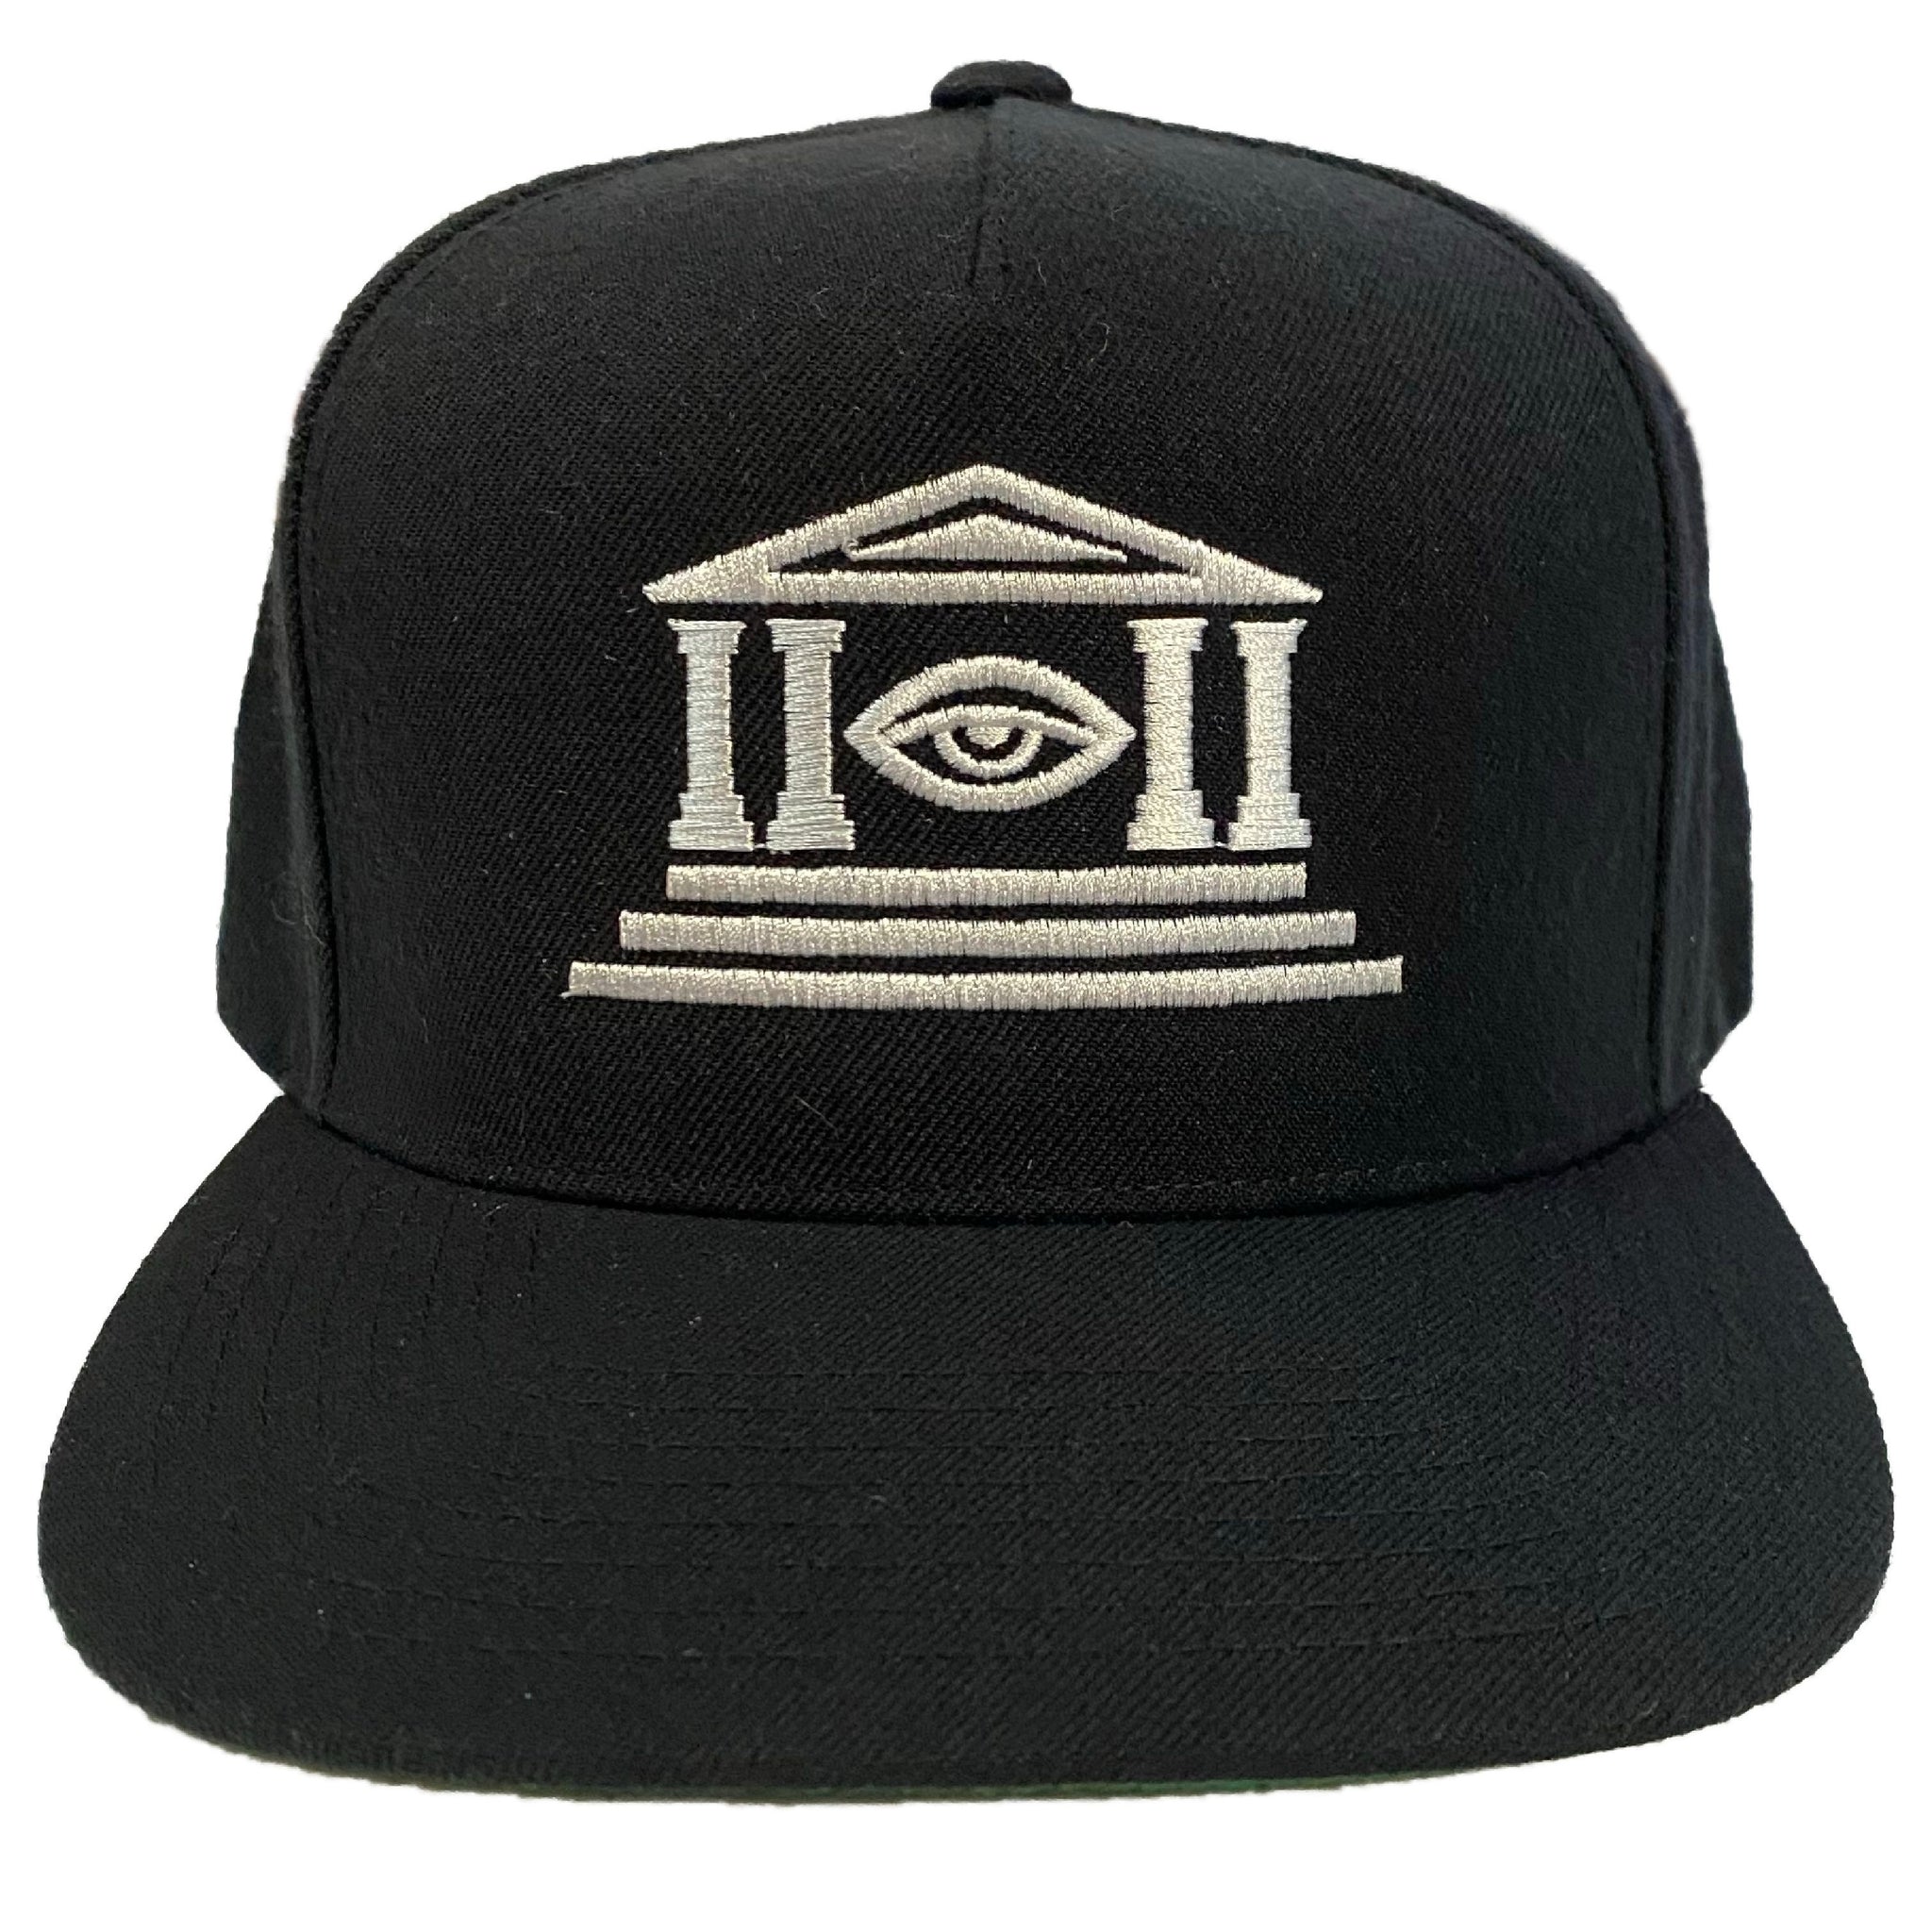 HoL Logo snap back hat